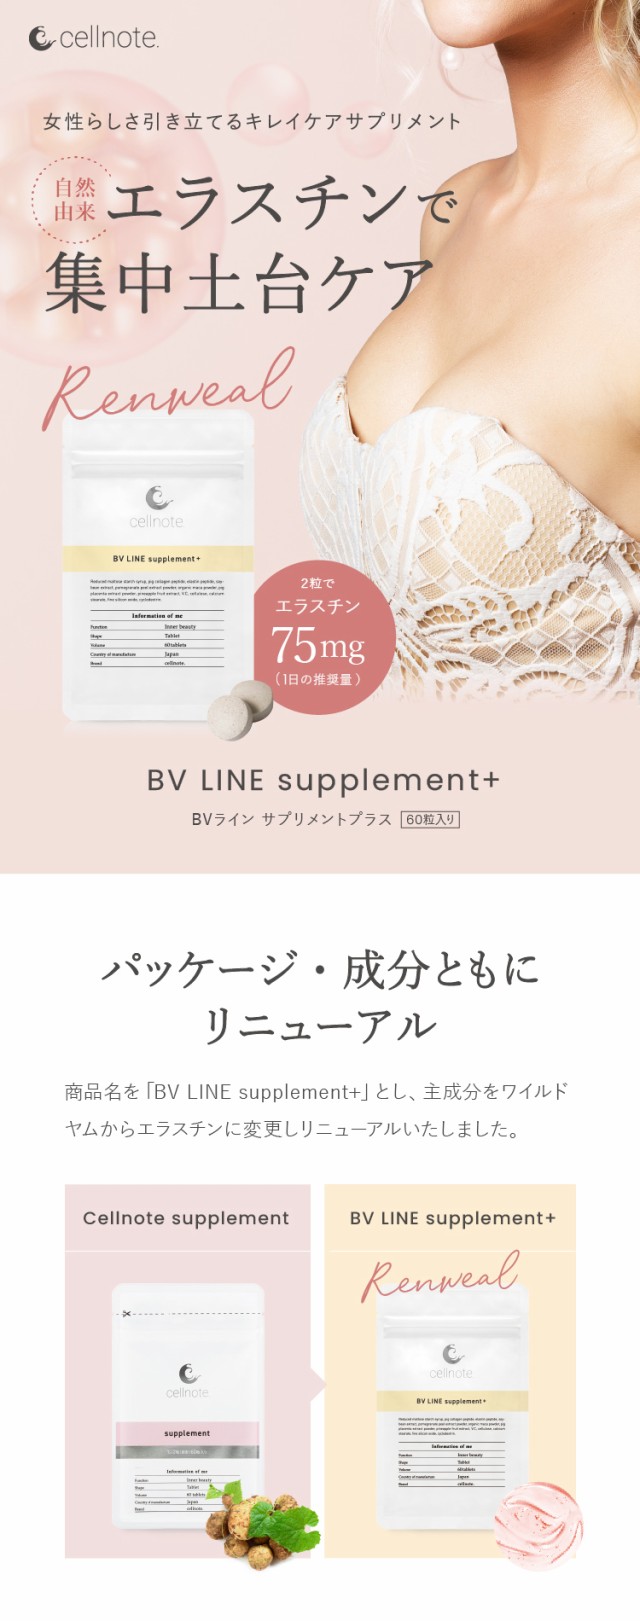 BV LINE supplement + ボリュームラインサプリメントプラス